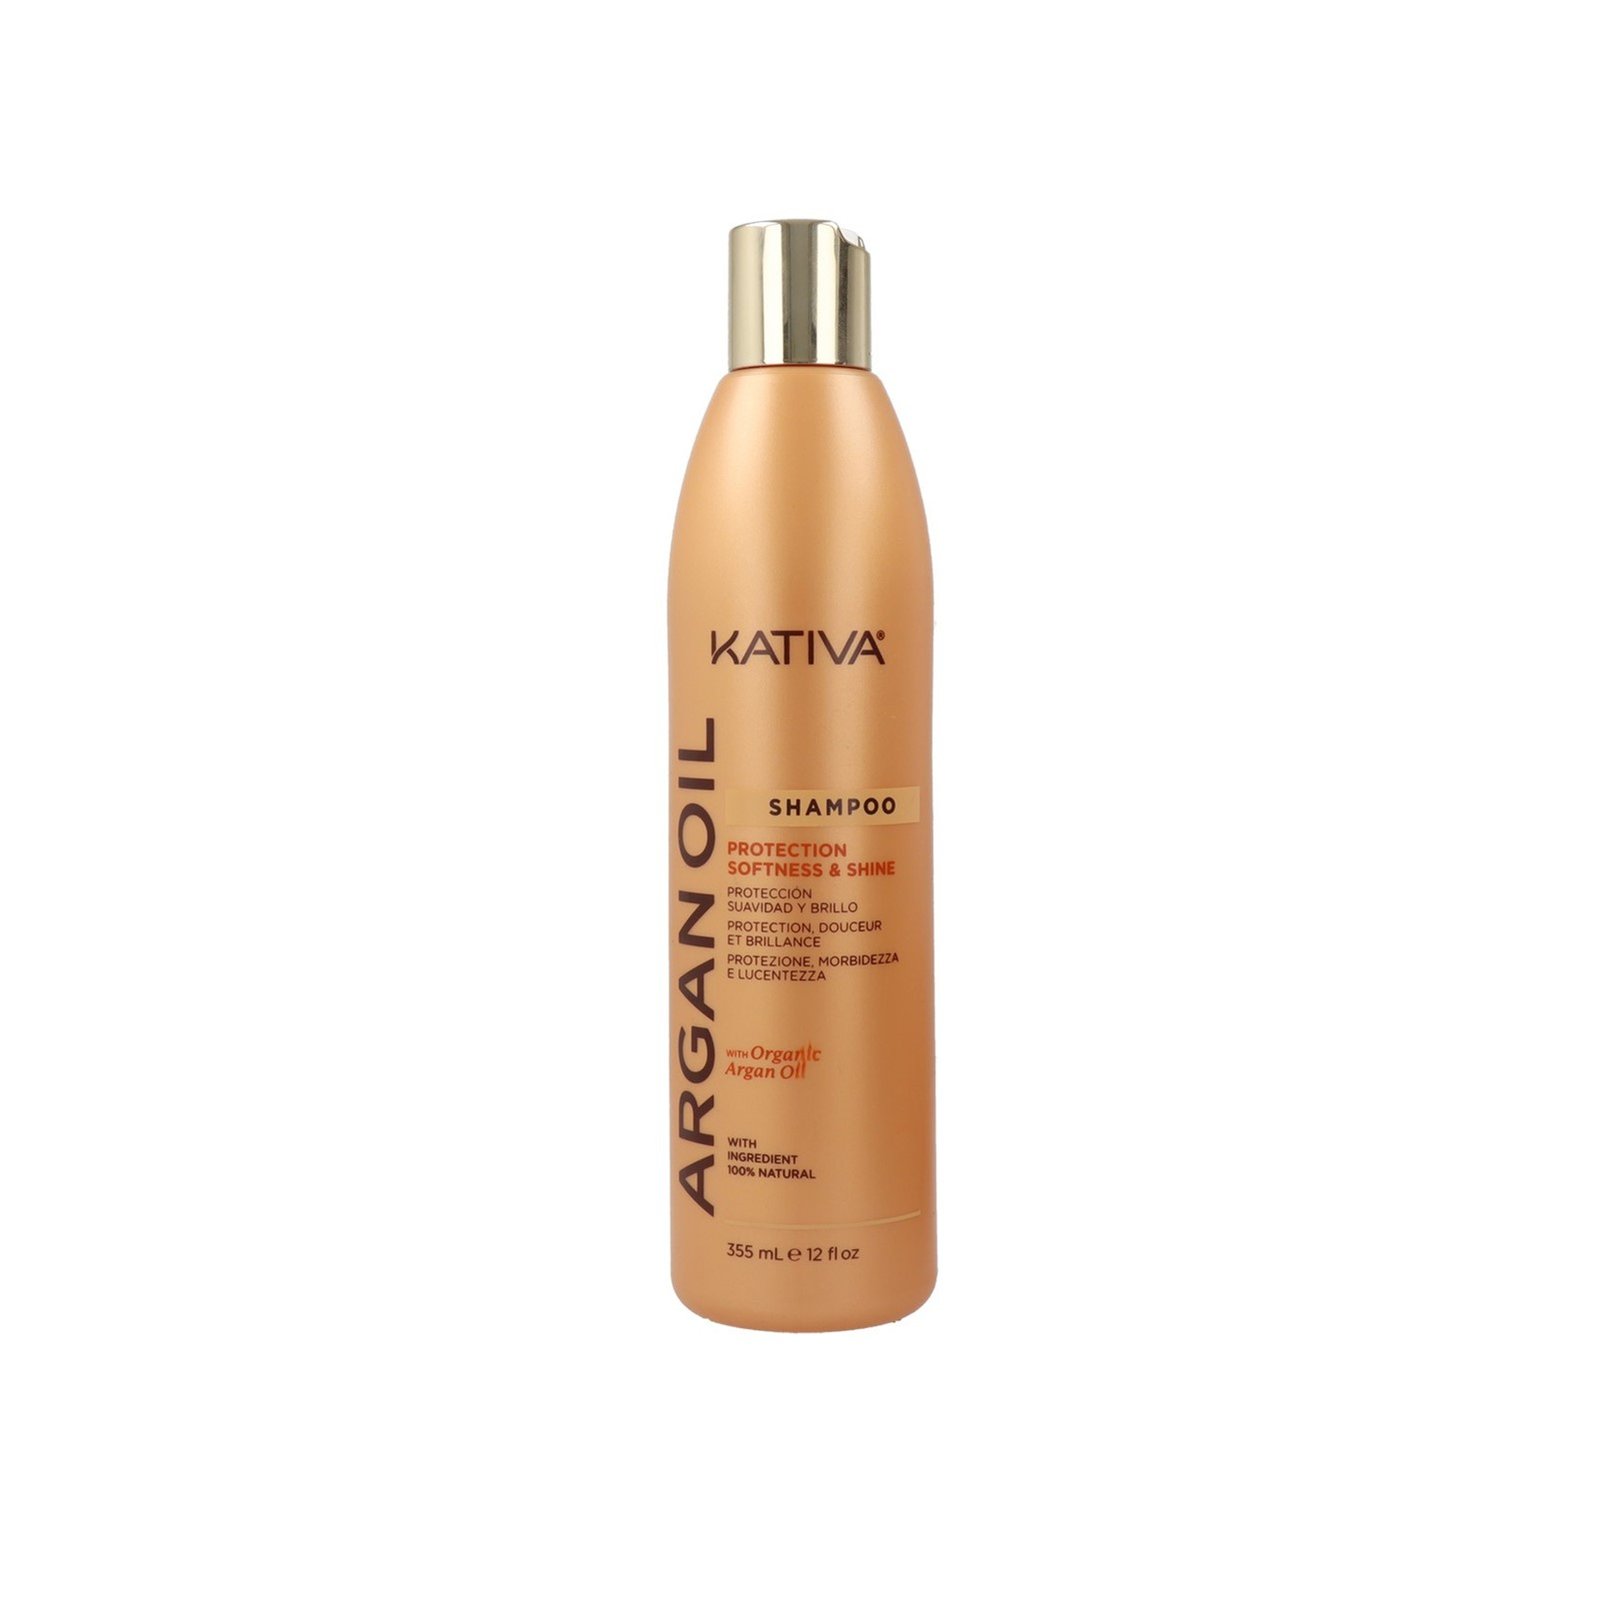 Kativa Argan Oil Protection Softness & Shine Shampoo 355ml (12 fl oz)